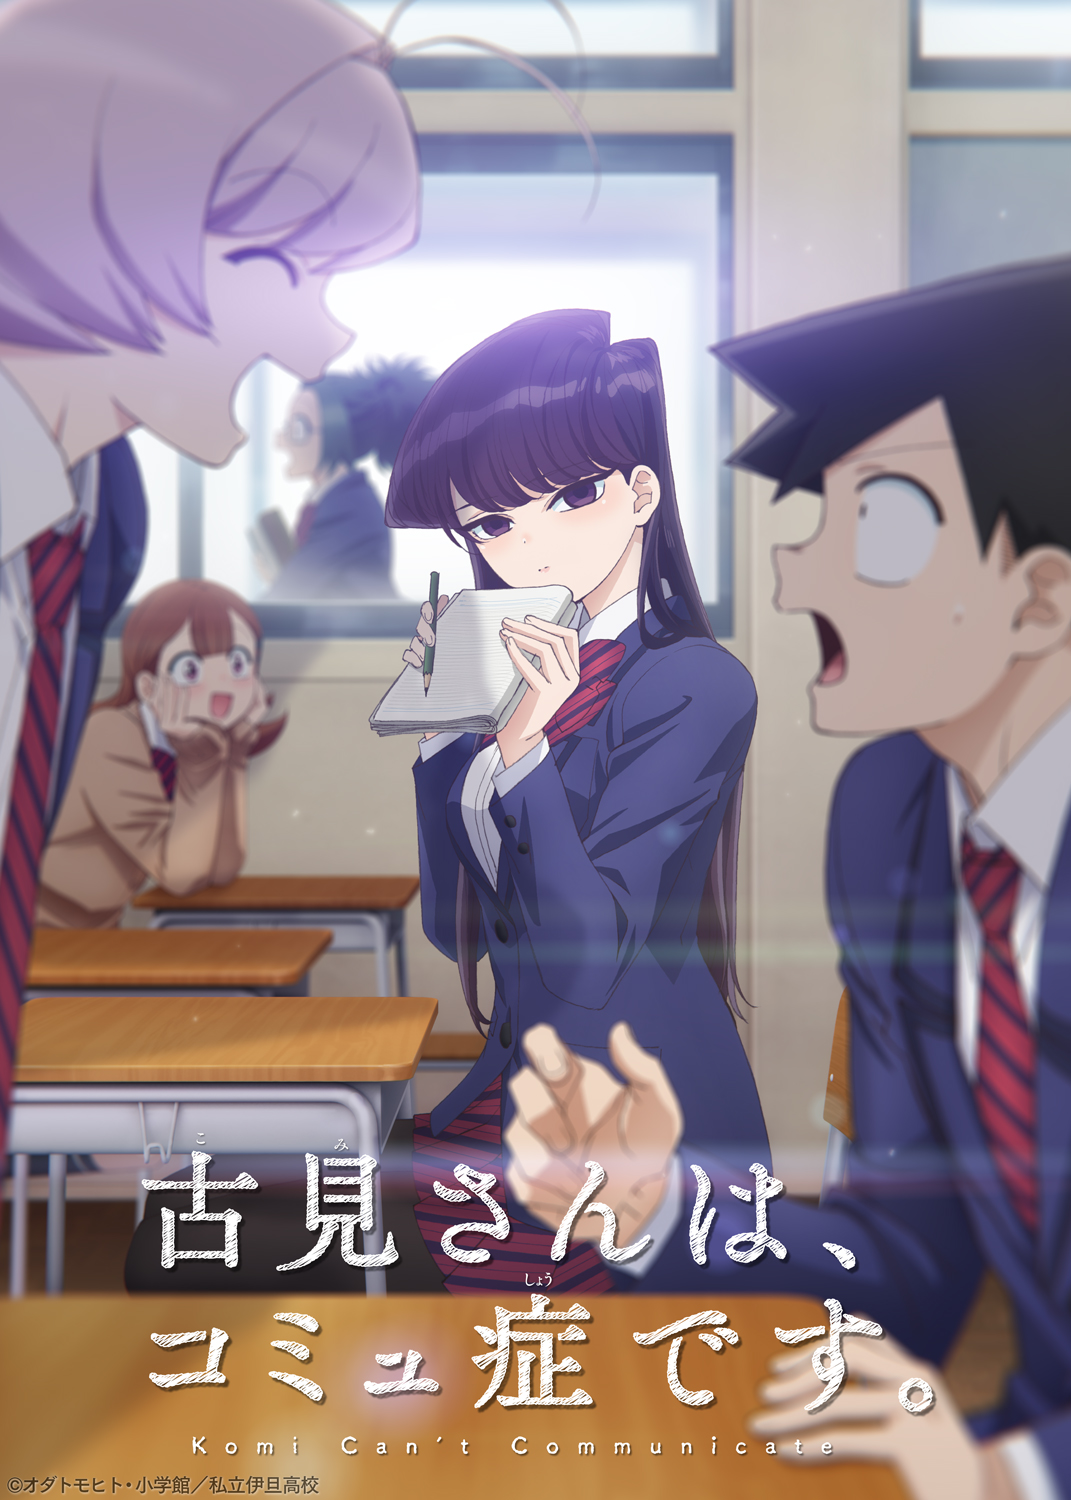 Komi Cant Communicate  Main Trailer  Netflix Anime  YouTube